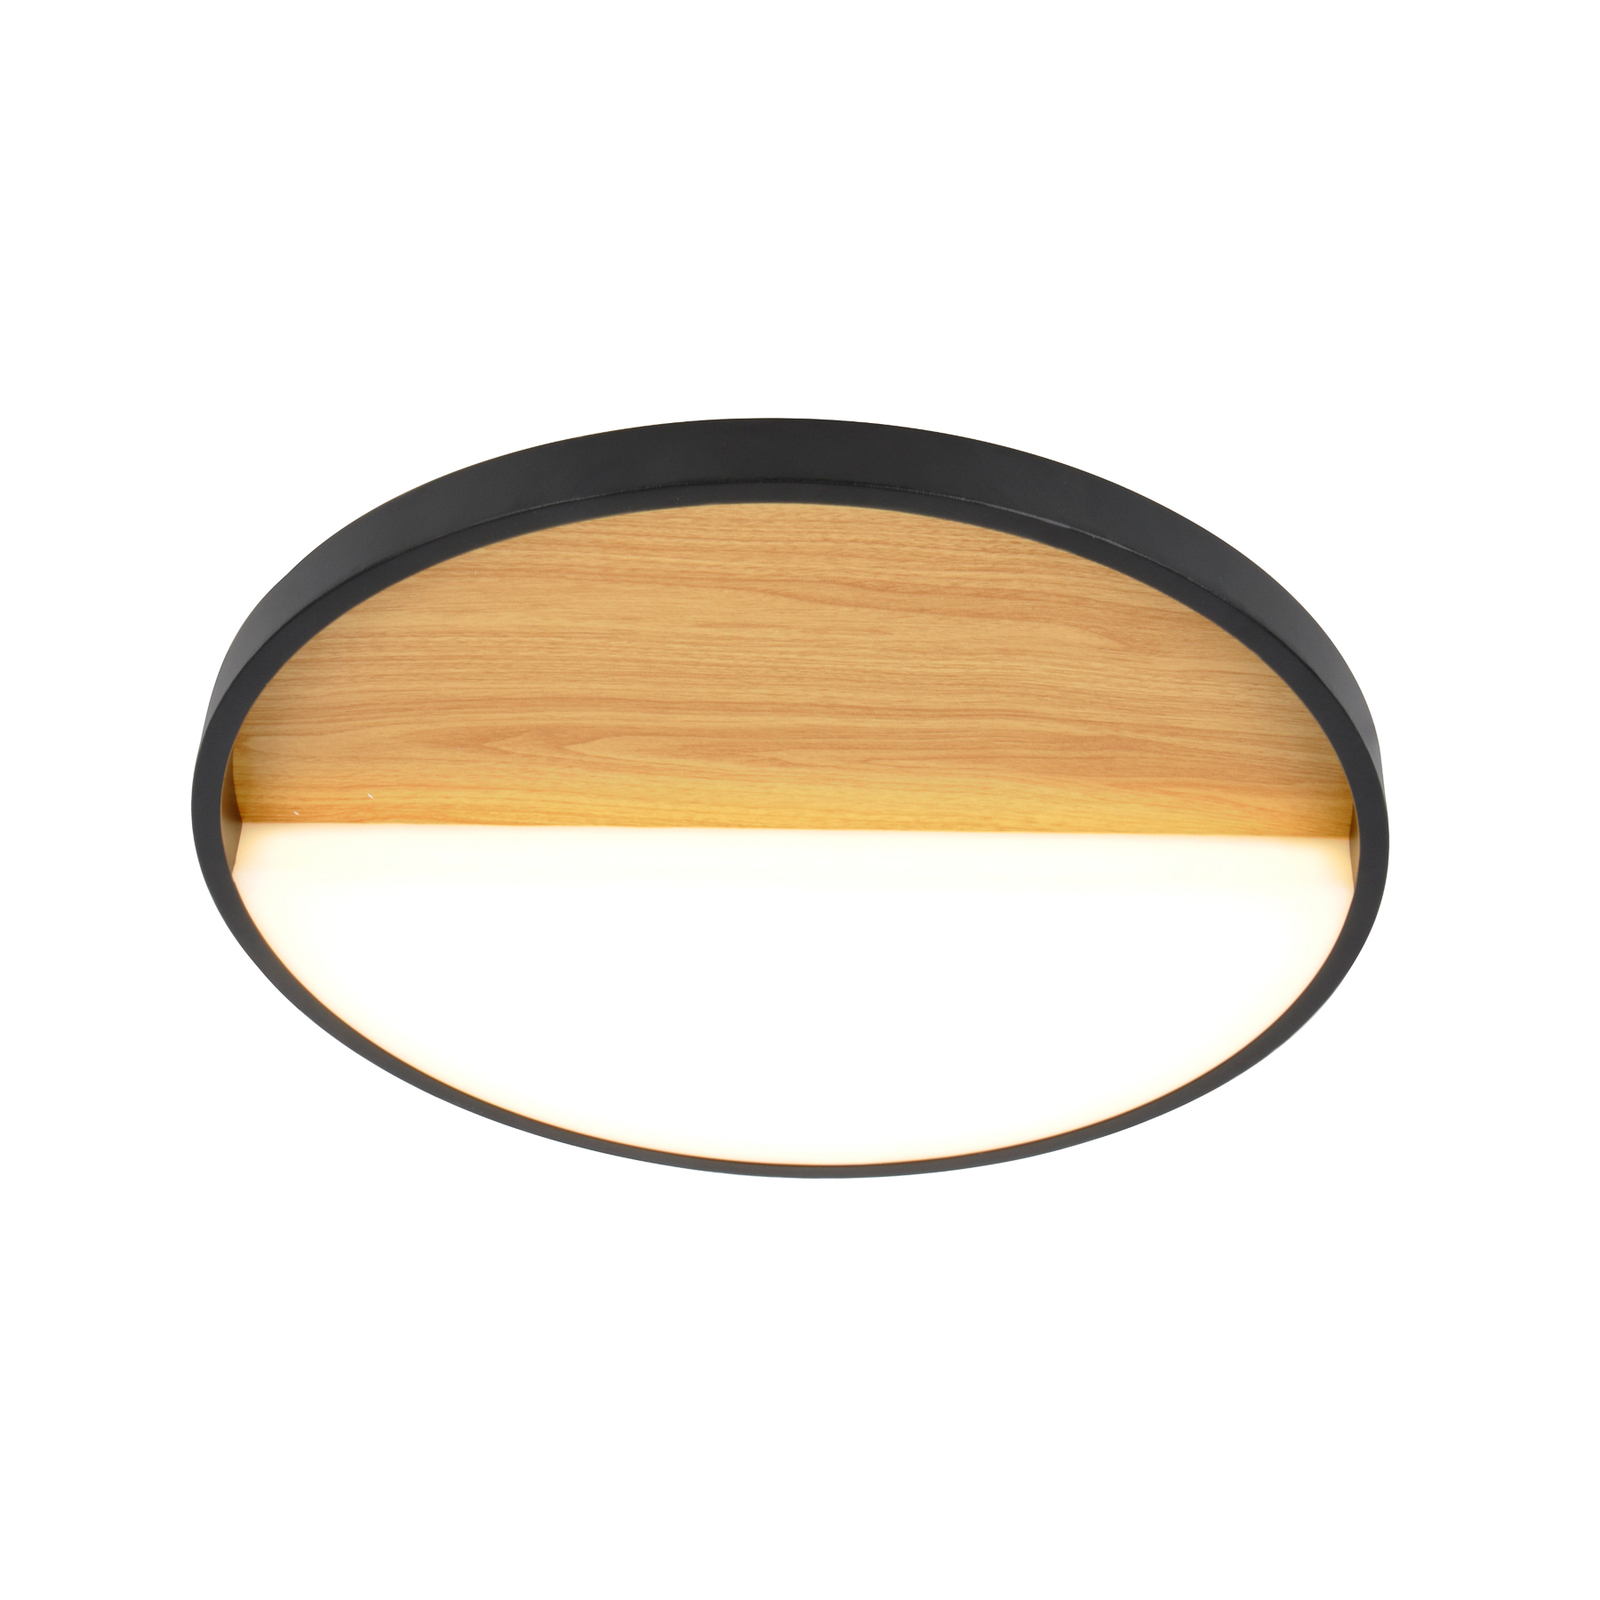 LED wall light Vista, light wood/black, 40 x 40 cm